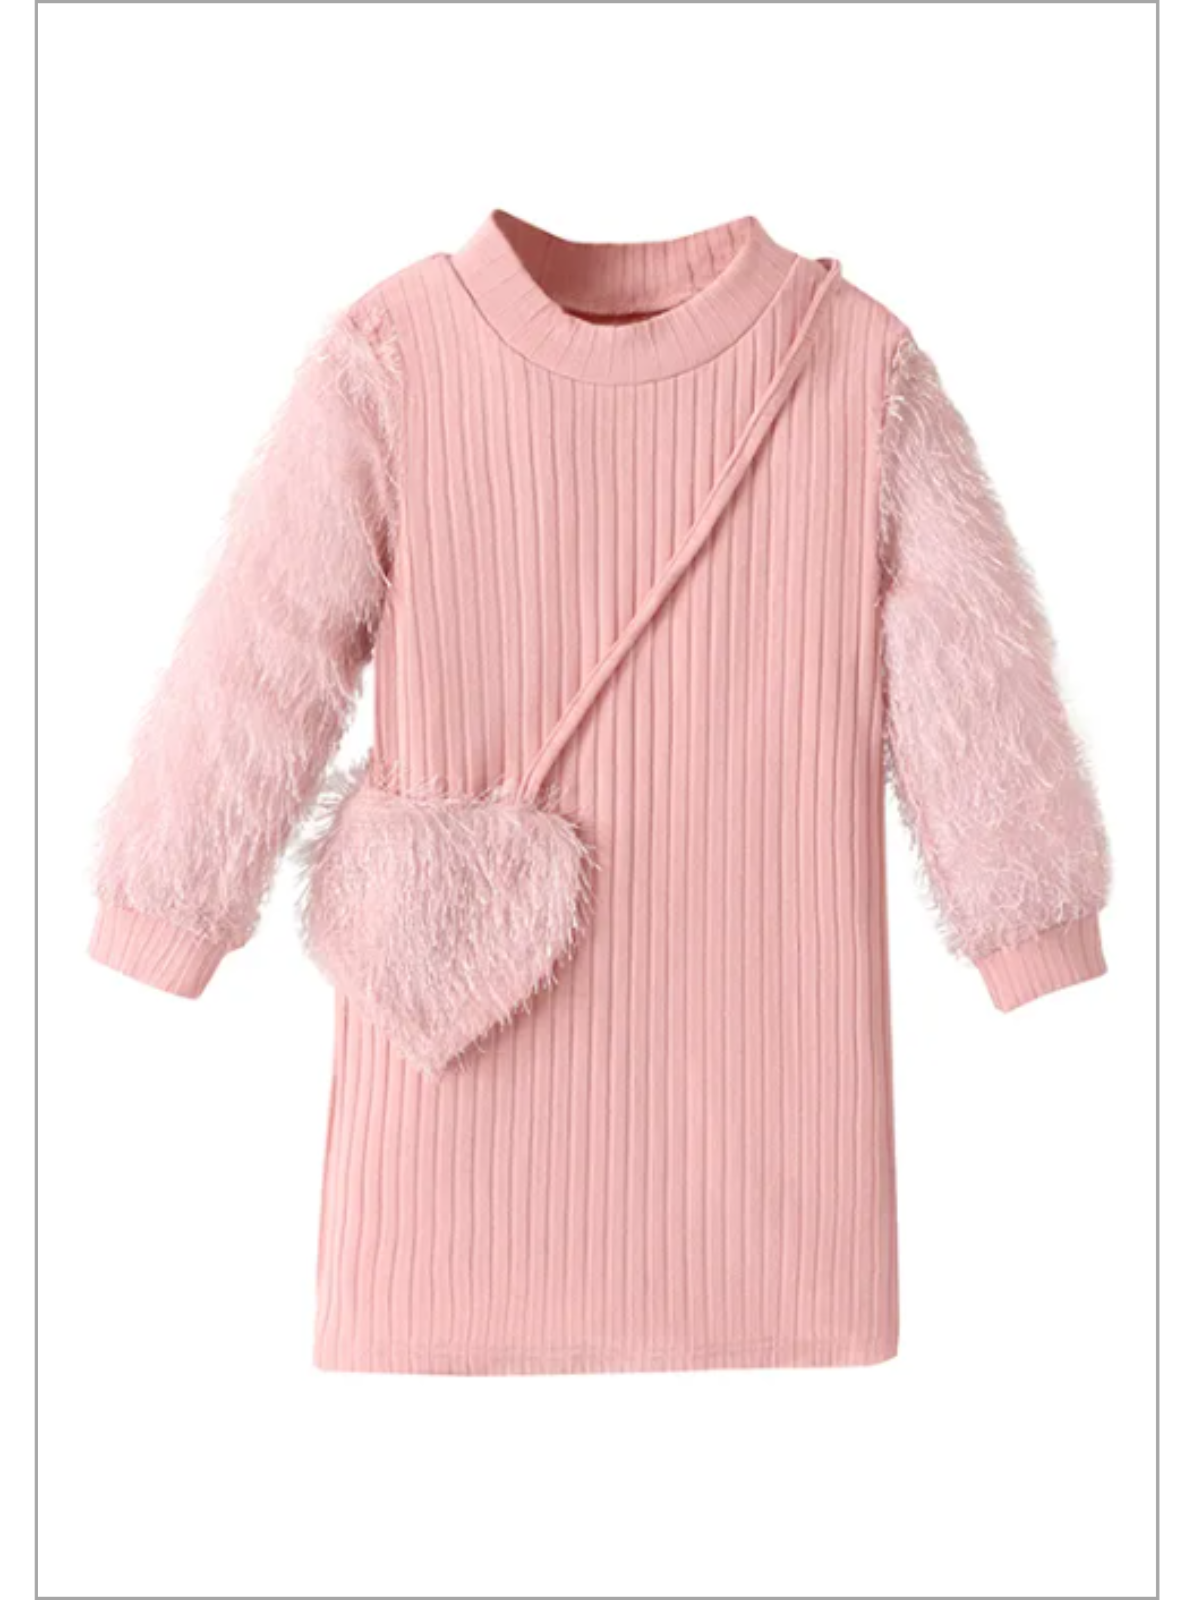 Mia Belle Girls Fur Sleeve Sweater Dress | Girls Winter Dresses